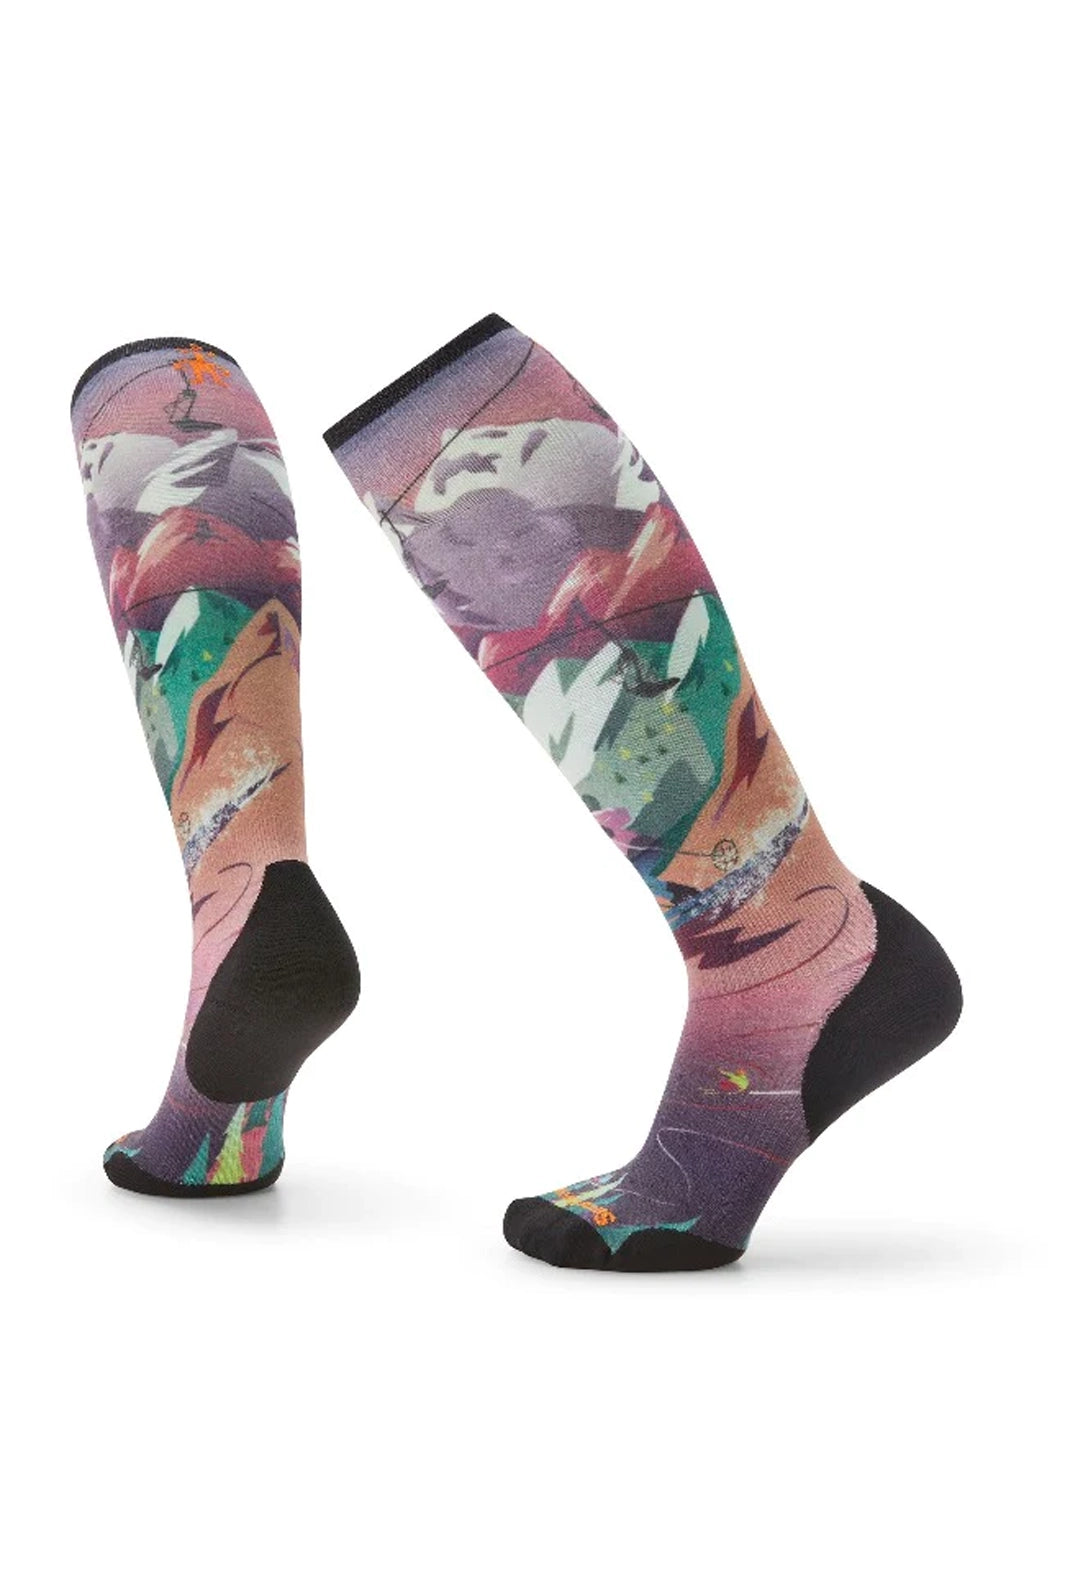 Smartwool Bunny Print Calf Ski Socks